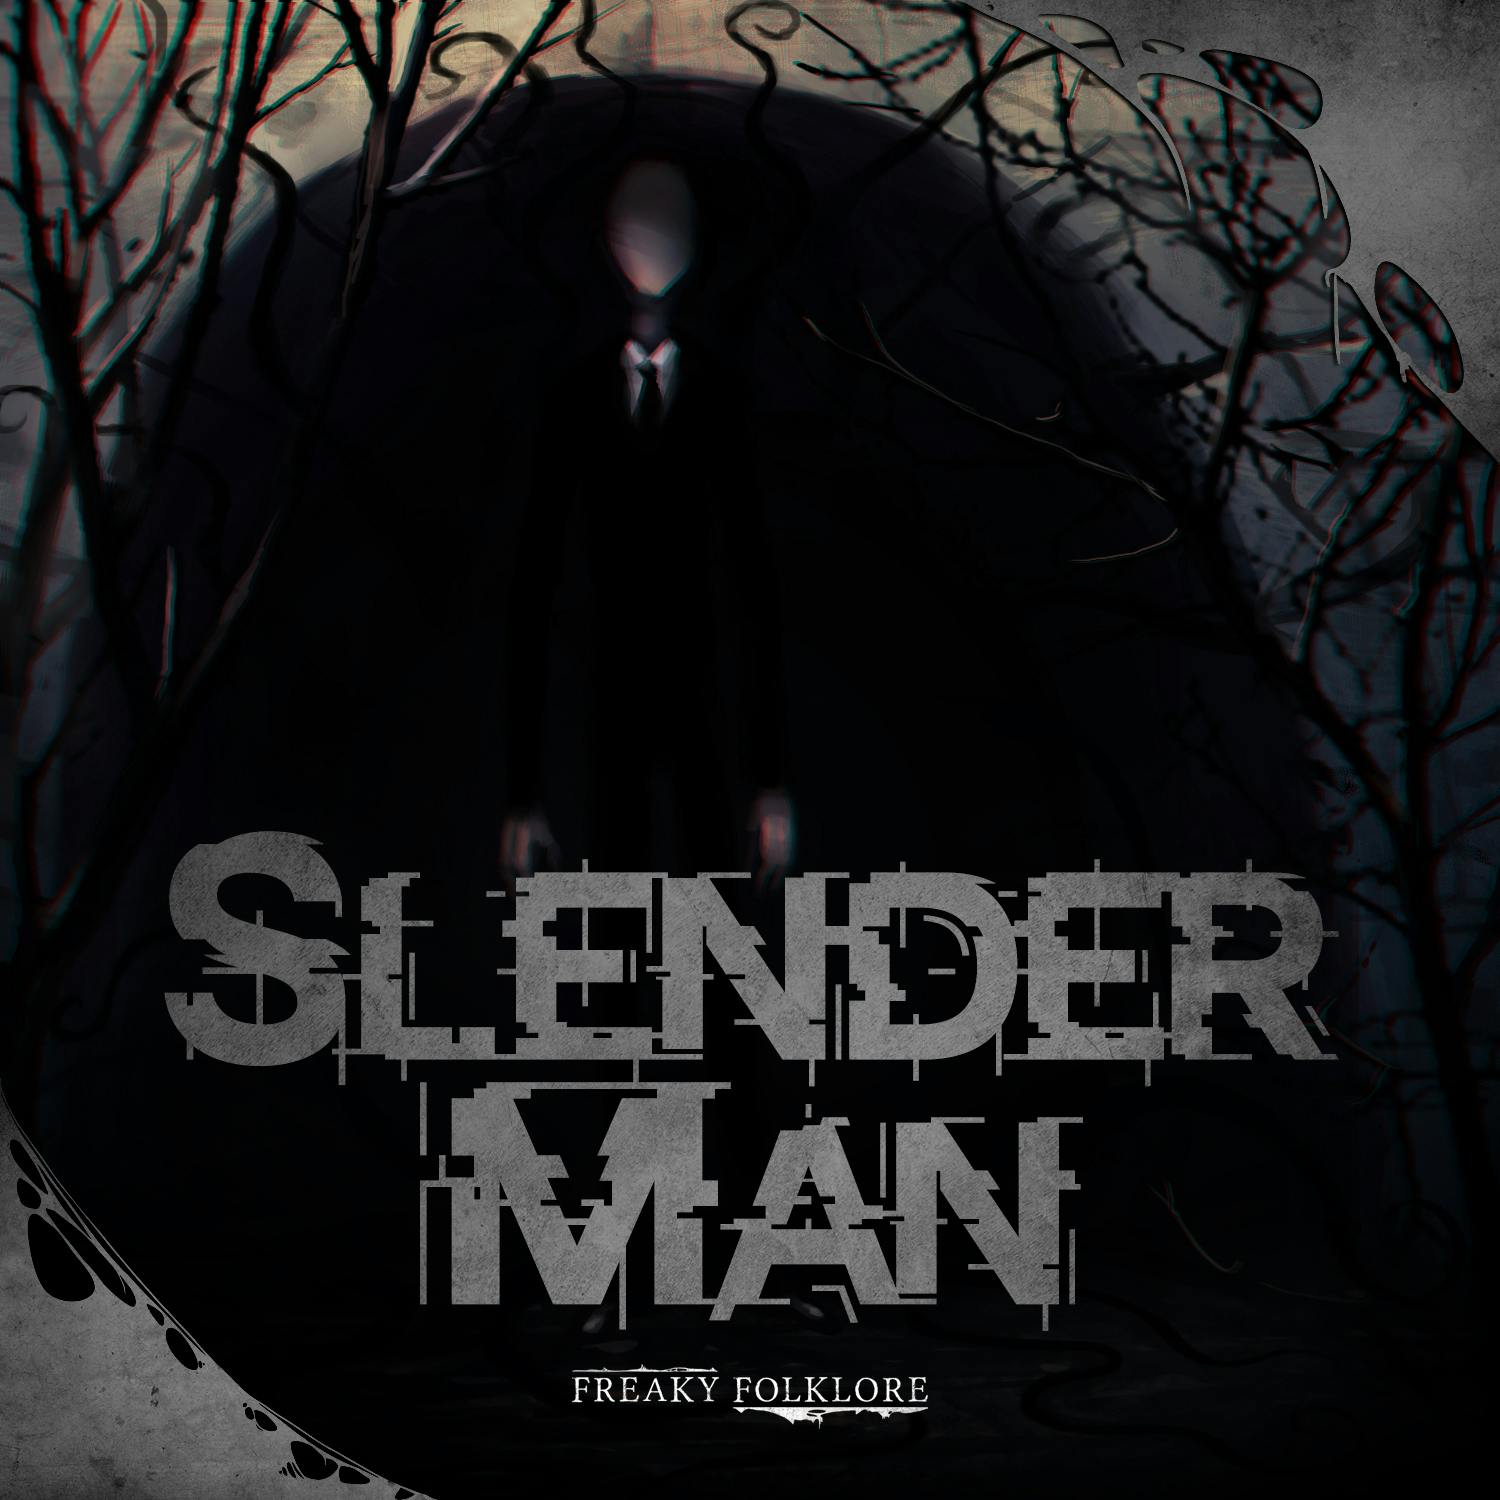 Slender Man - The Most Disturbing Internet Legend